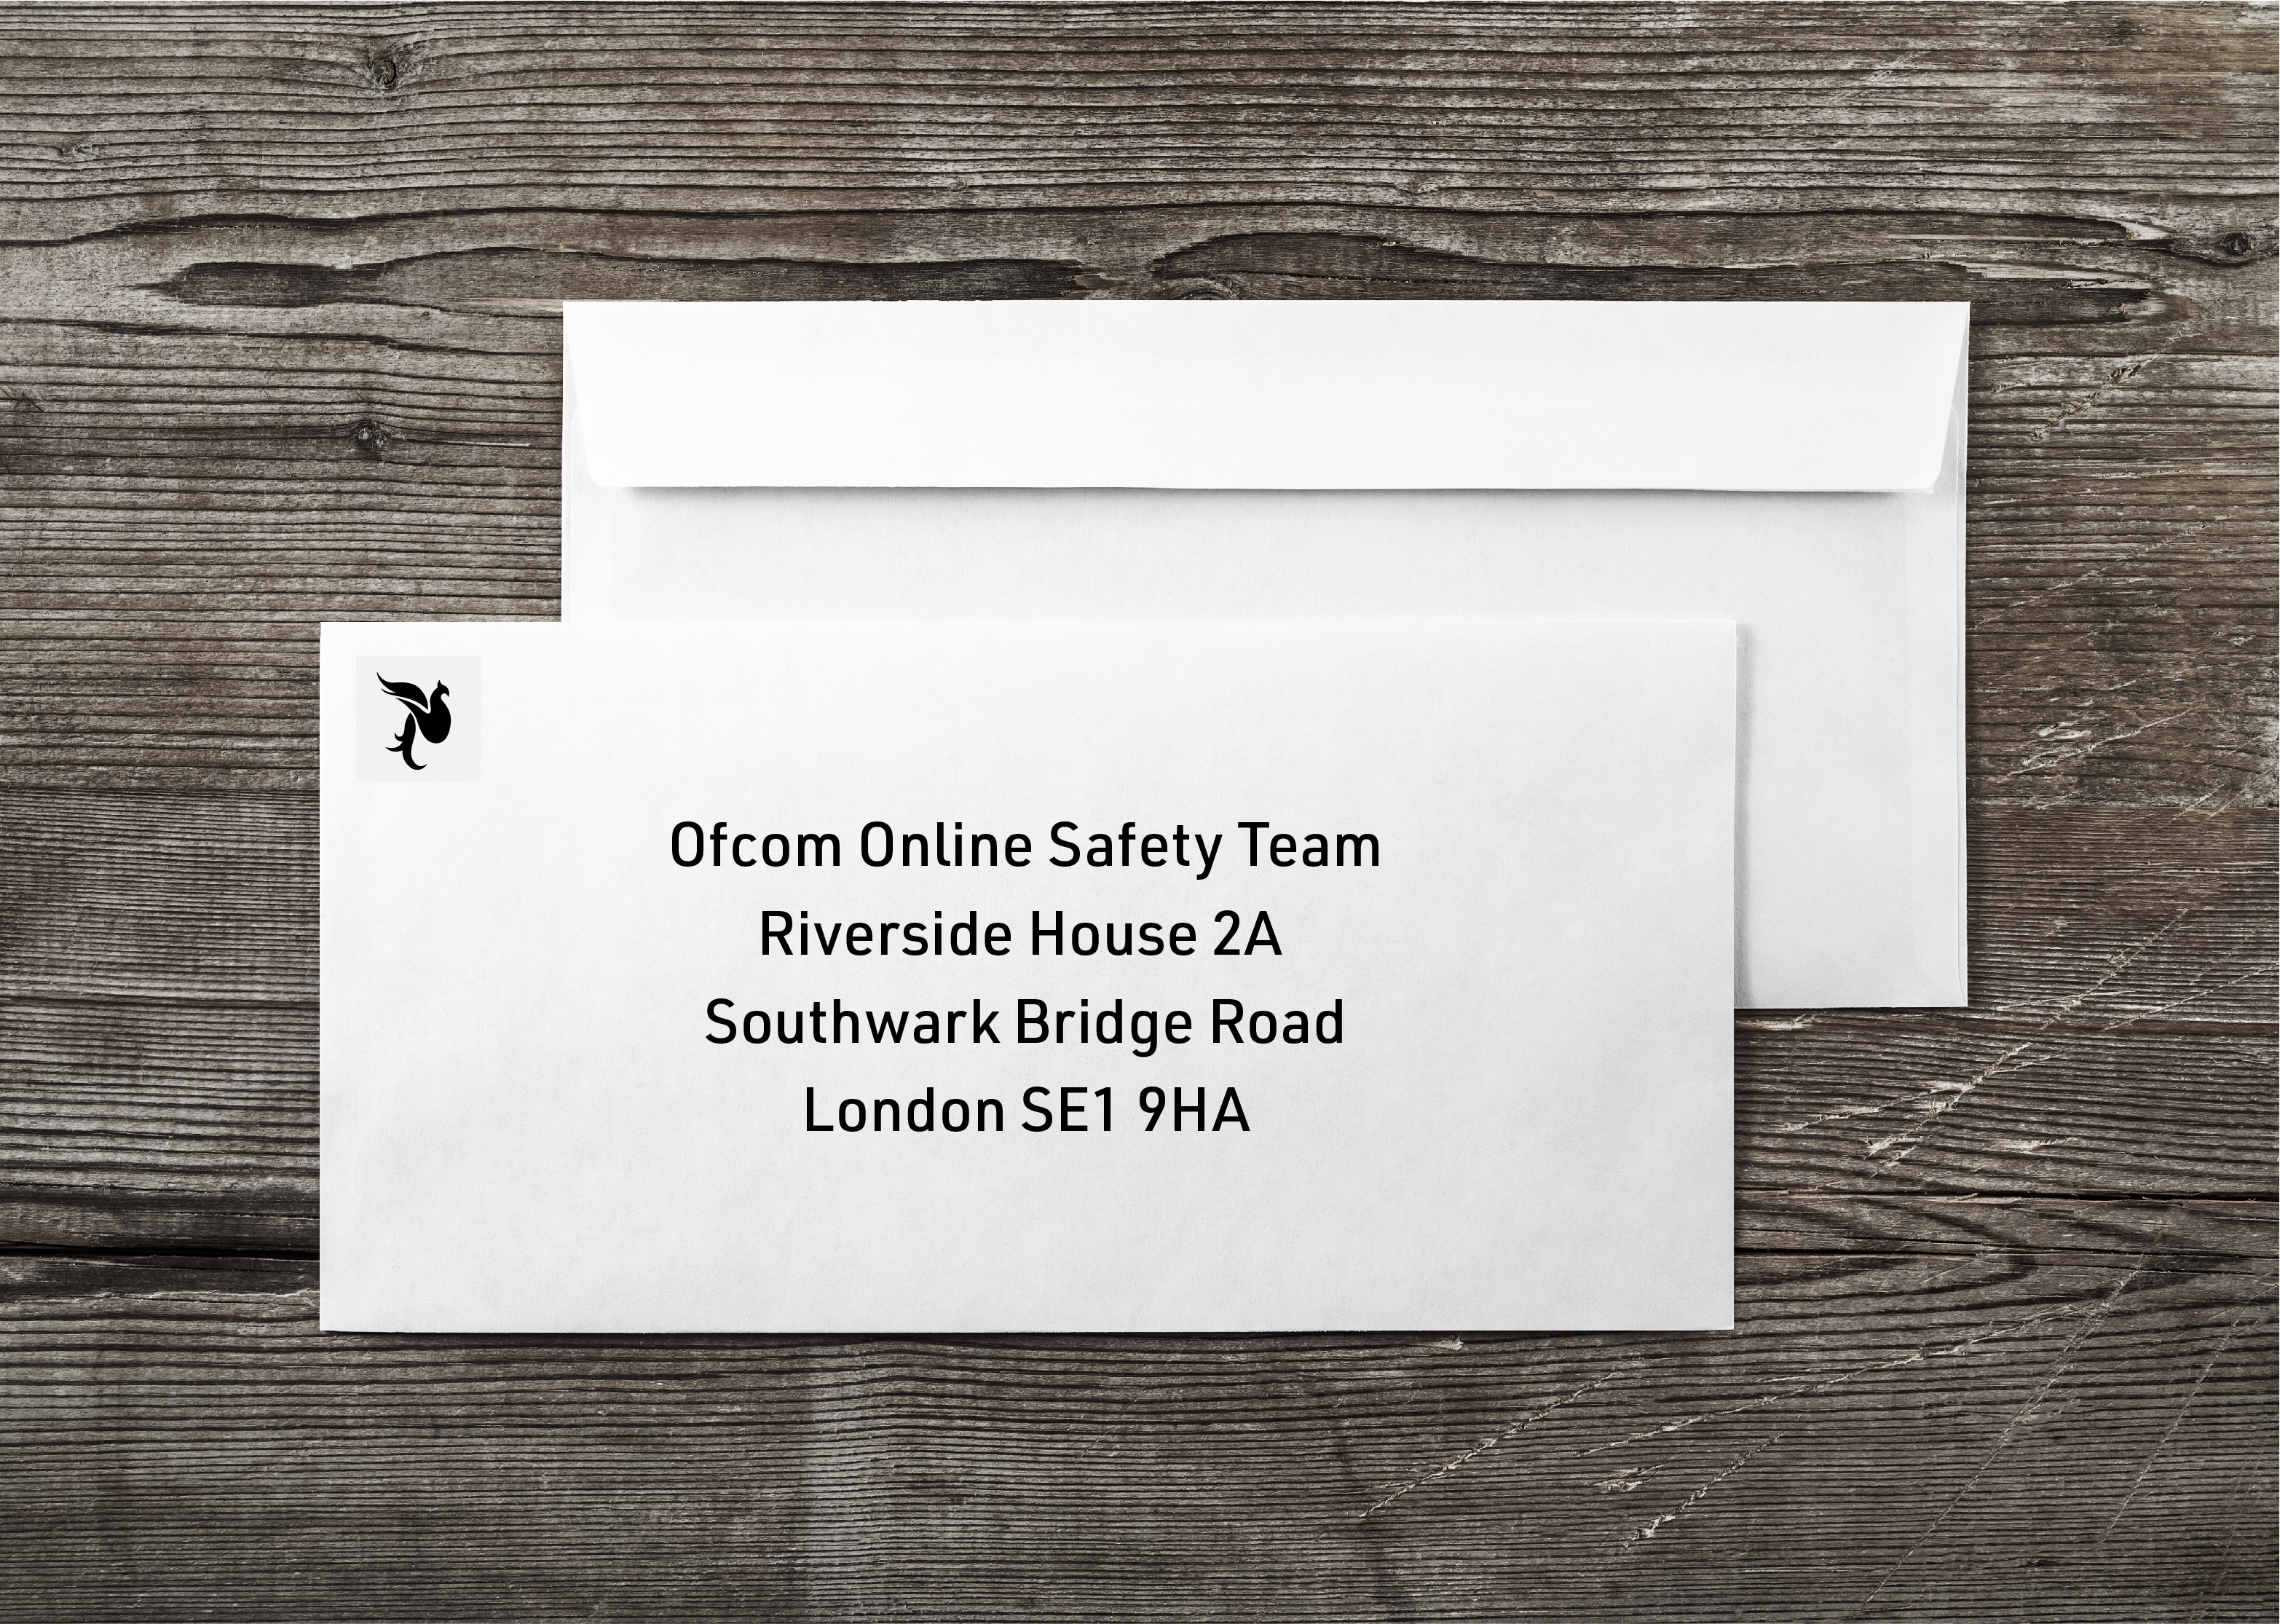 An envelope addressed to "Ofcom Online Safety Team"